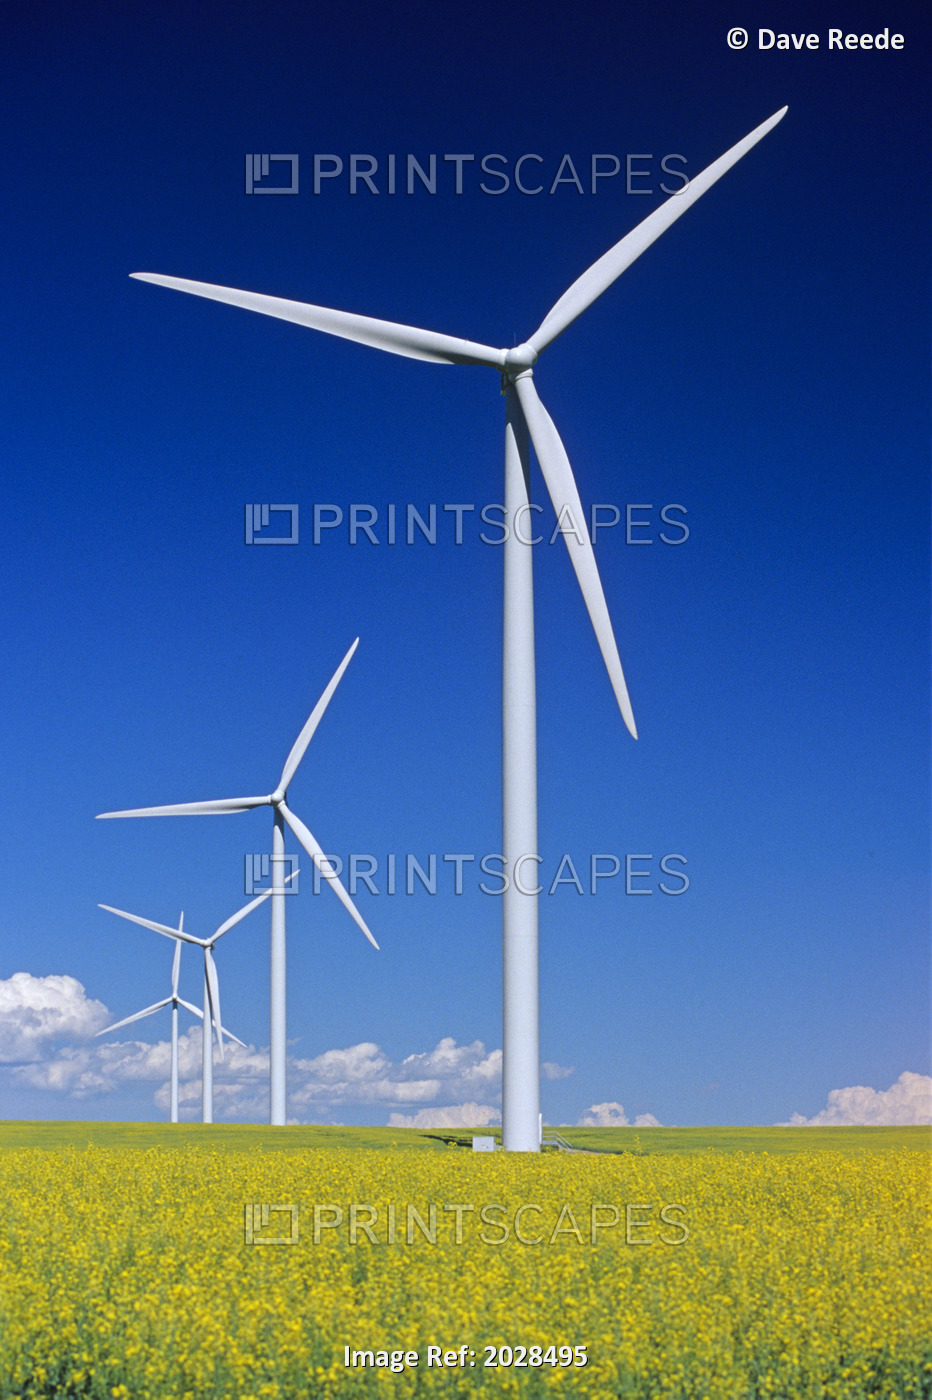 Wind Turbines In Canola Field, Near St. Leon, Manitoba